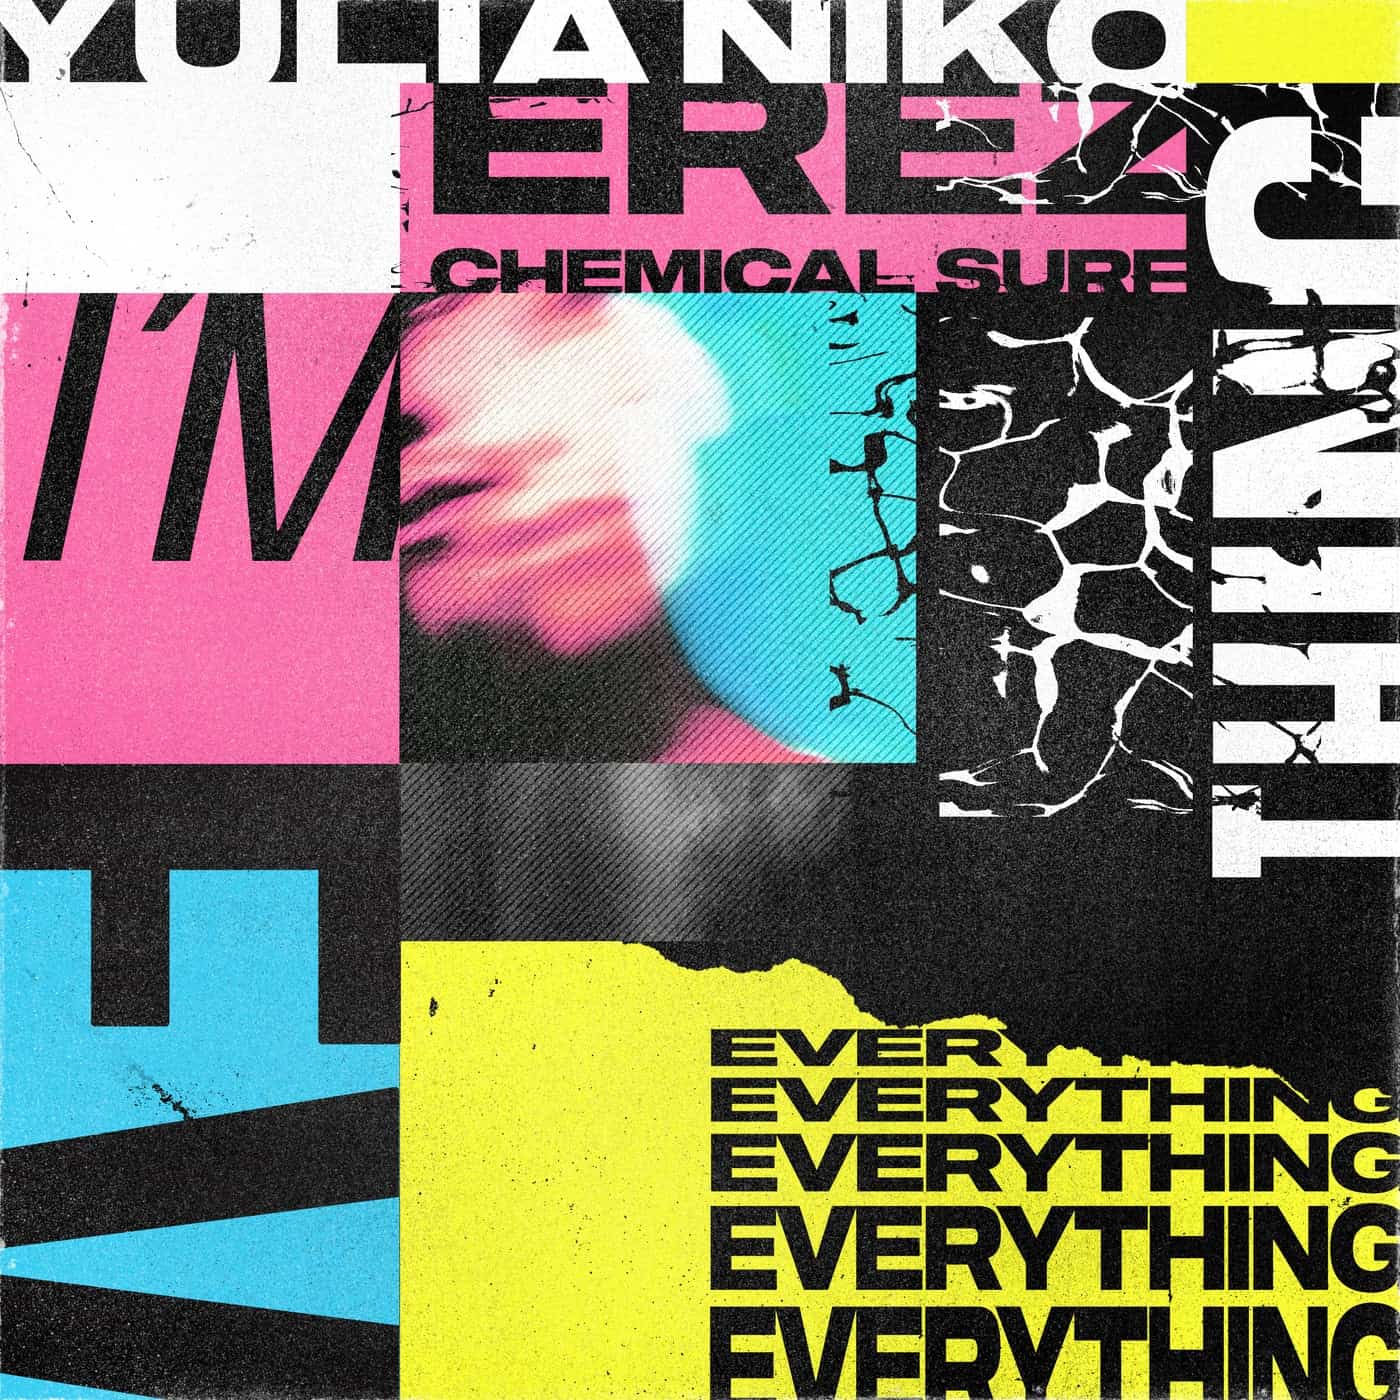 image cover: Erez, Yulia Niko - I'm Everything (Chemical Surf Remix) / GPM709E